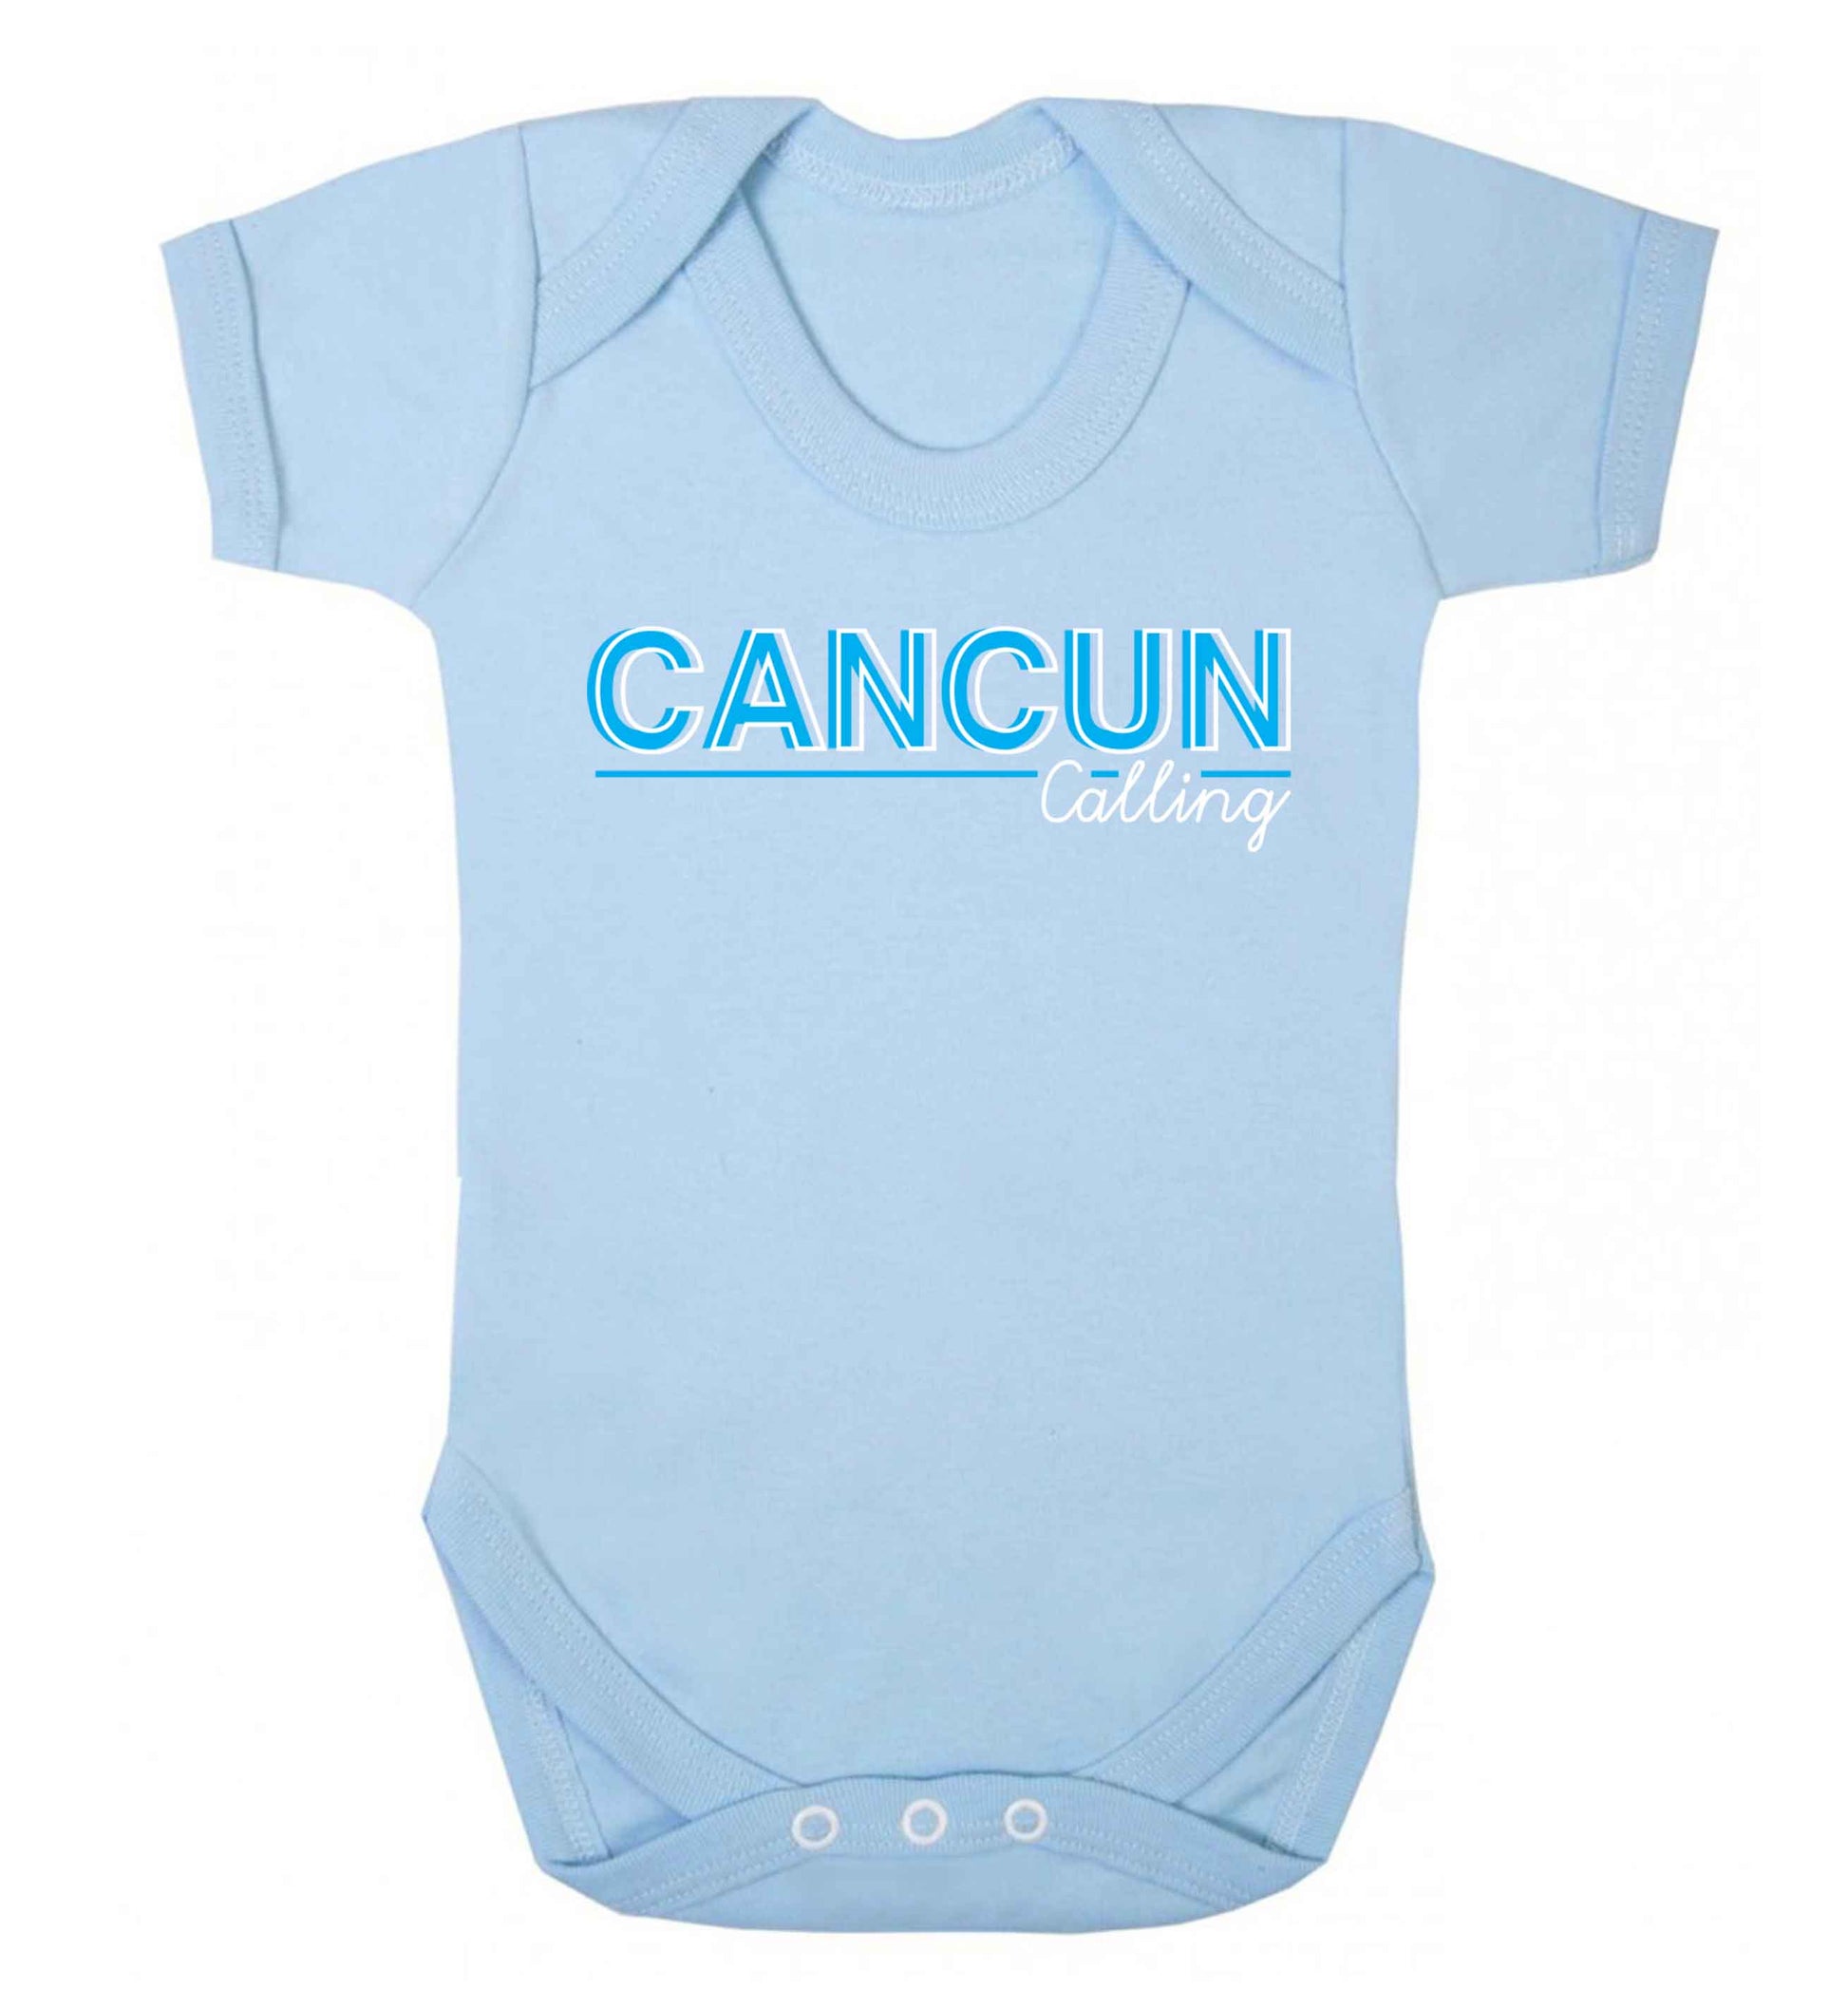 Cancun calling Baby Vest pale blue 18-24 months